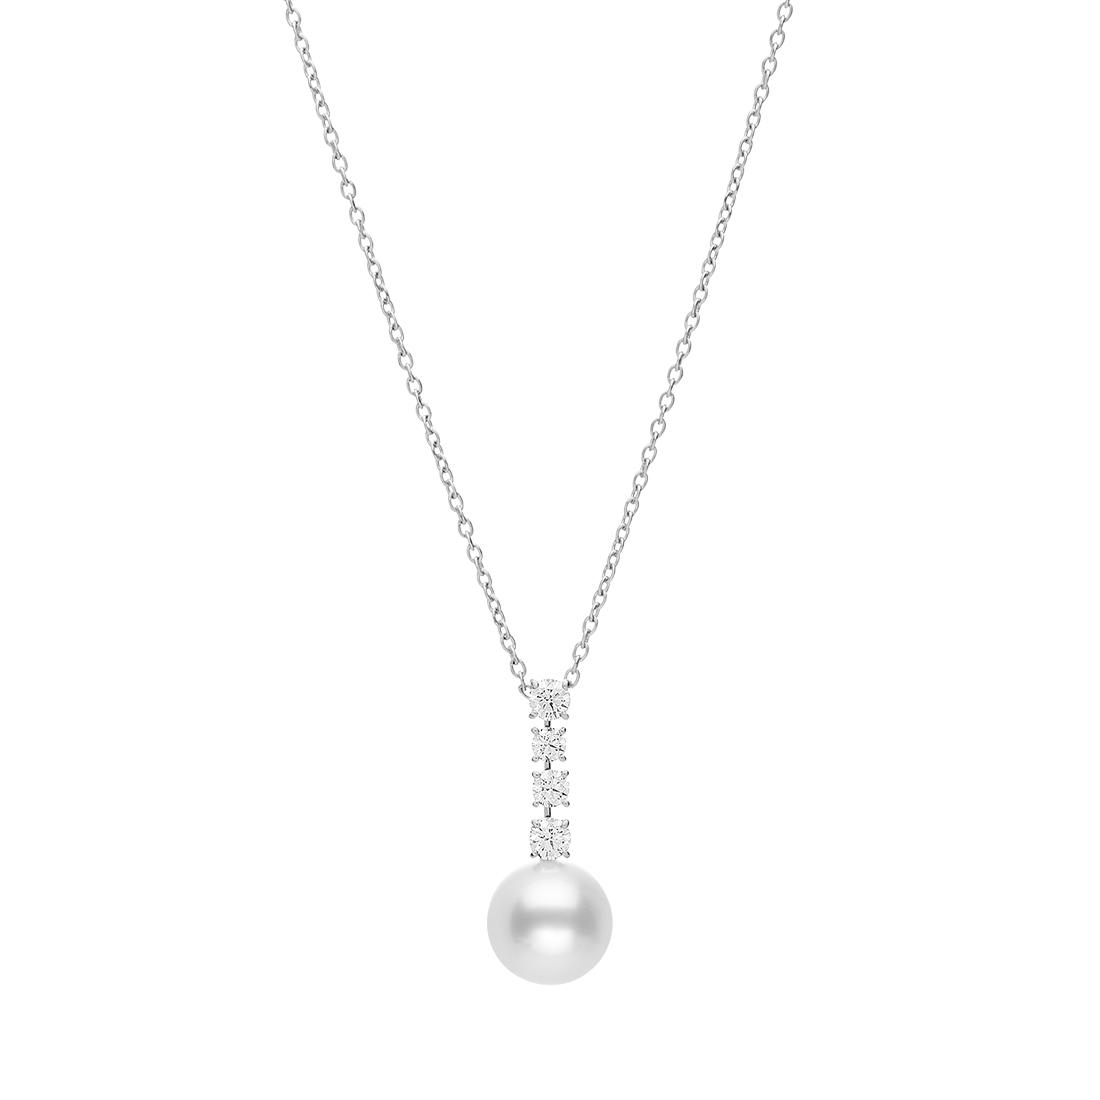 Mikimoto 12mm "A+" White South Sea Pearl and Diamond Drop Pendant Necklace